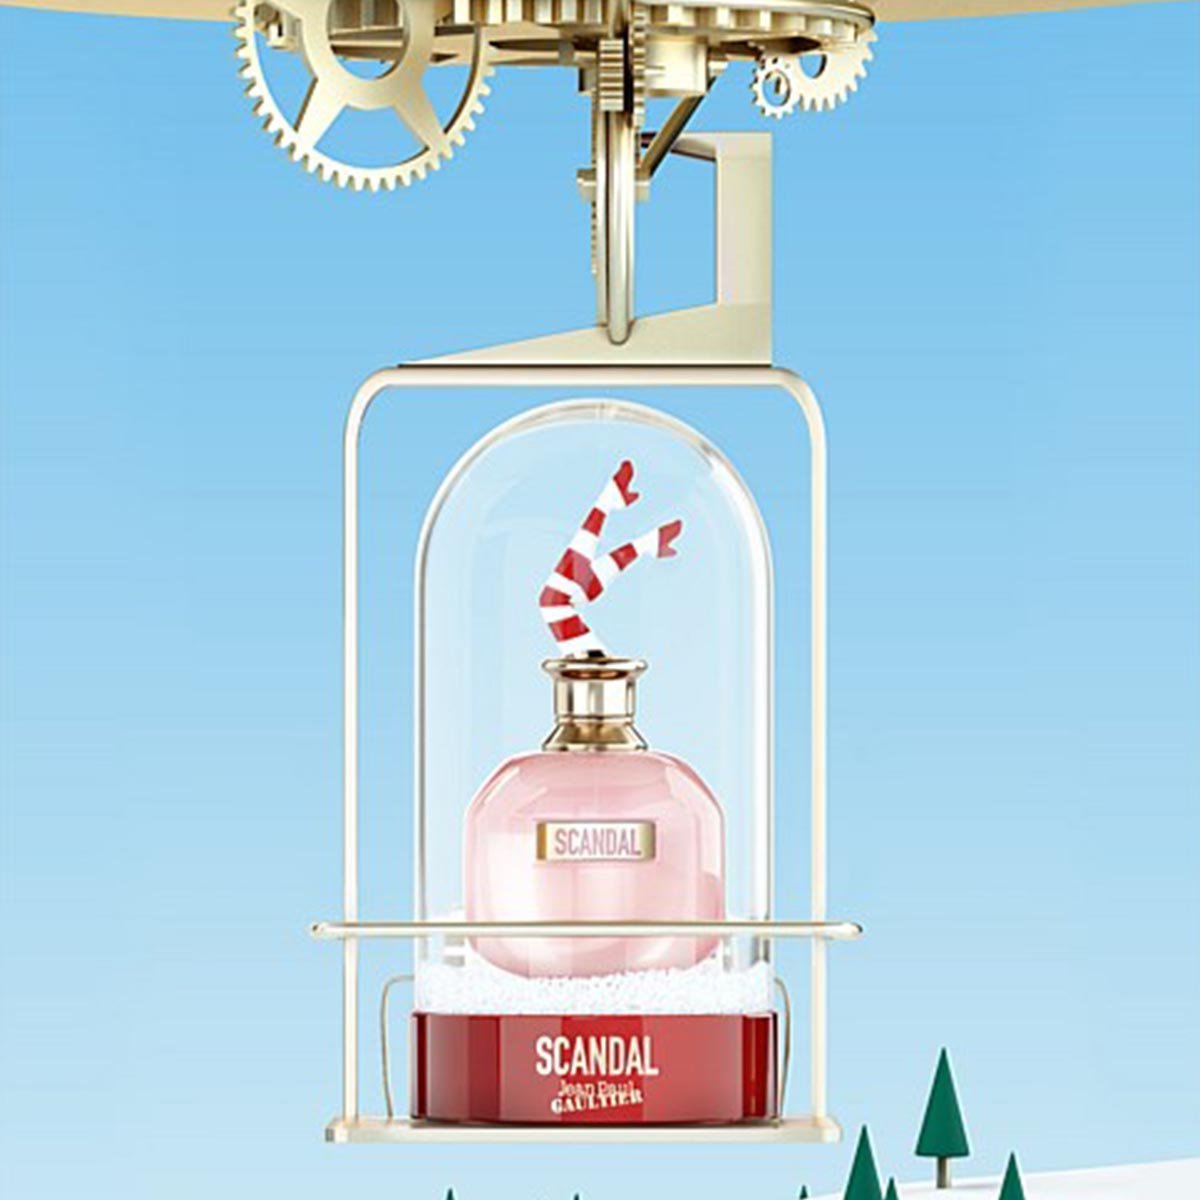 Jean Paul Gaultier Scandal EDP Christmas Edition - My Perfume Shop Australia